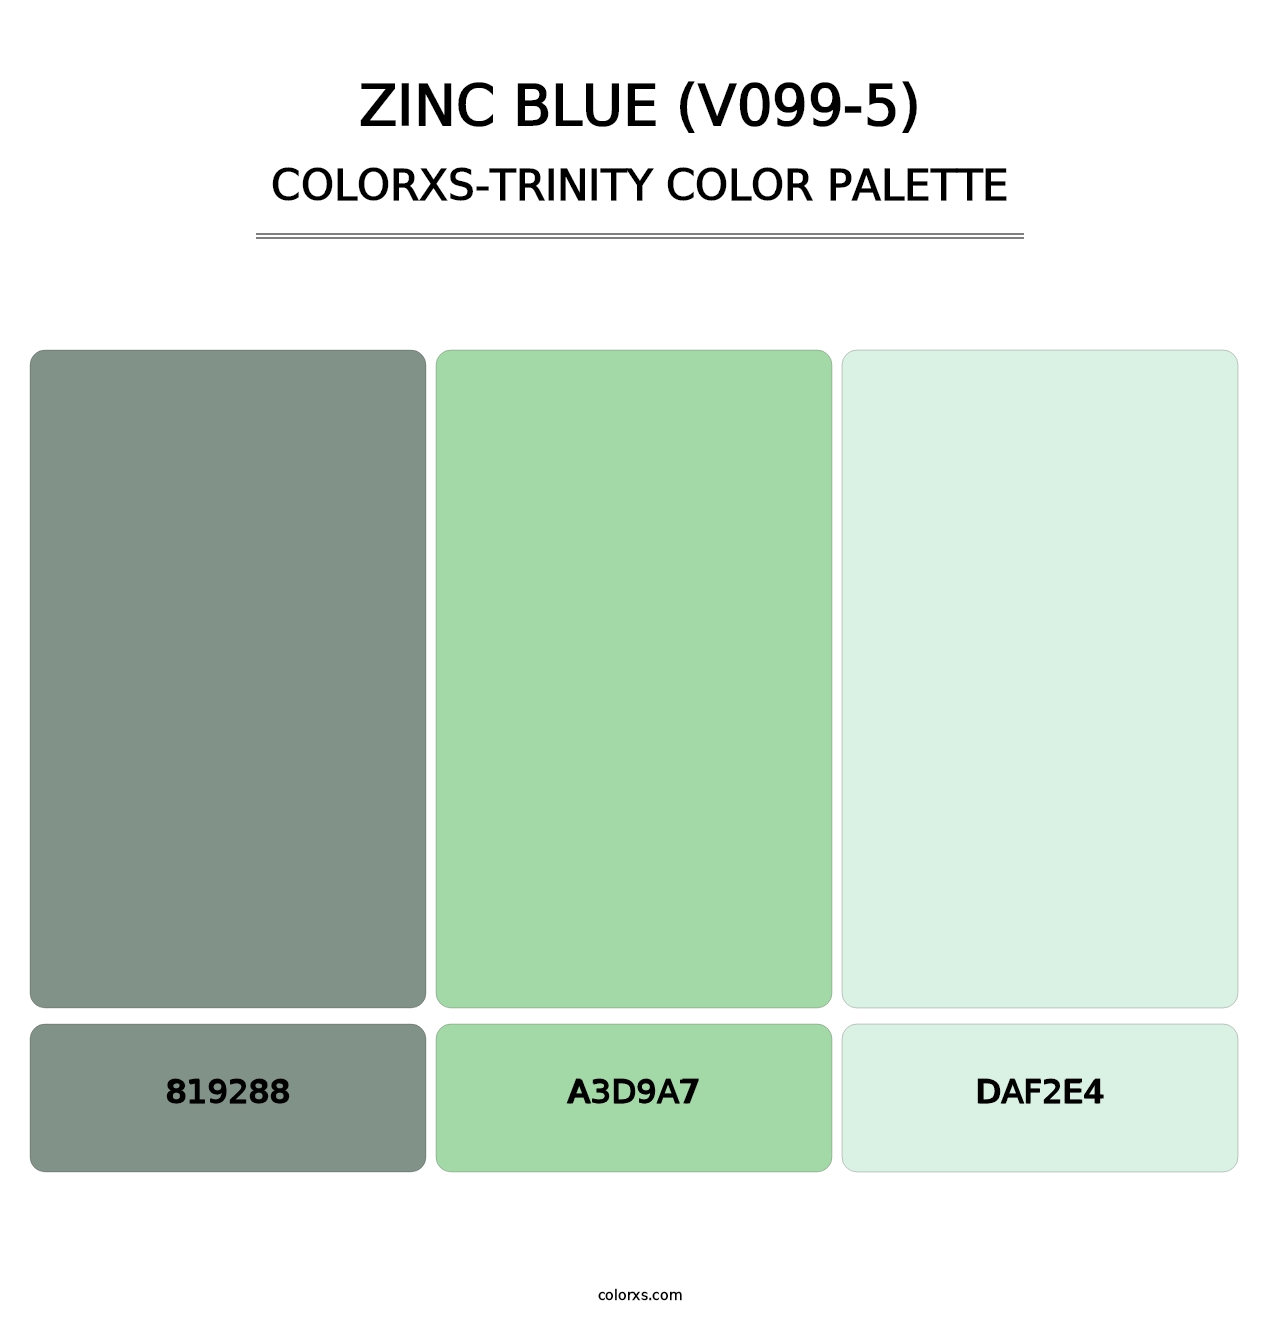 Zinc Blue (V099-5) - Colorxs Trinity Palette